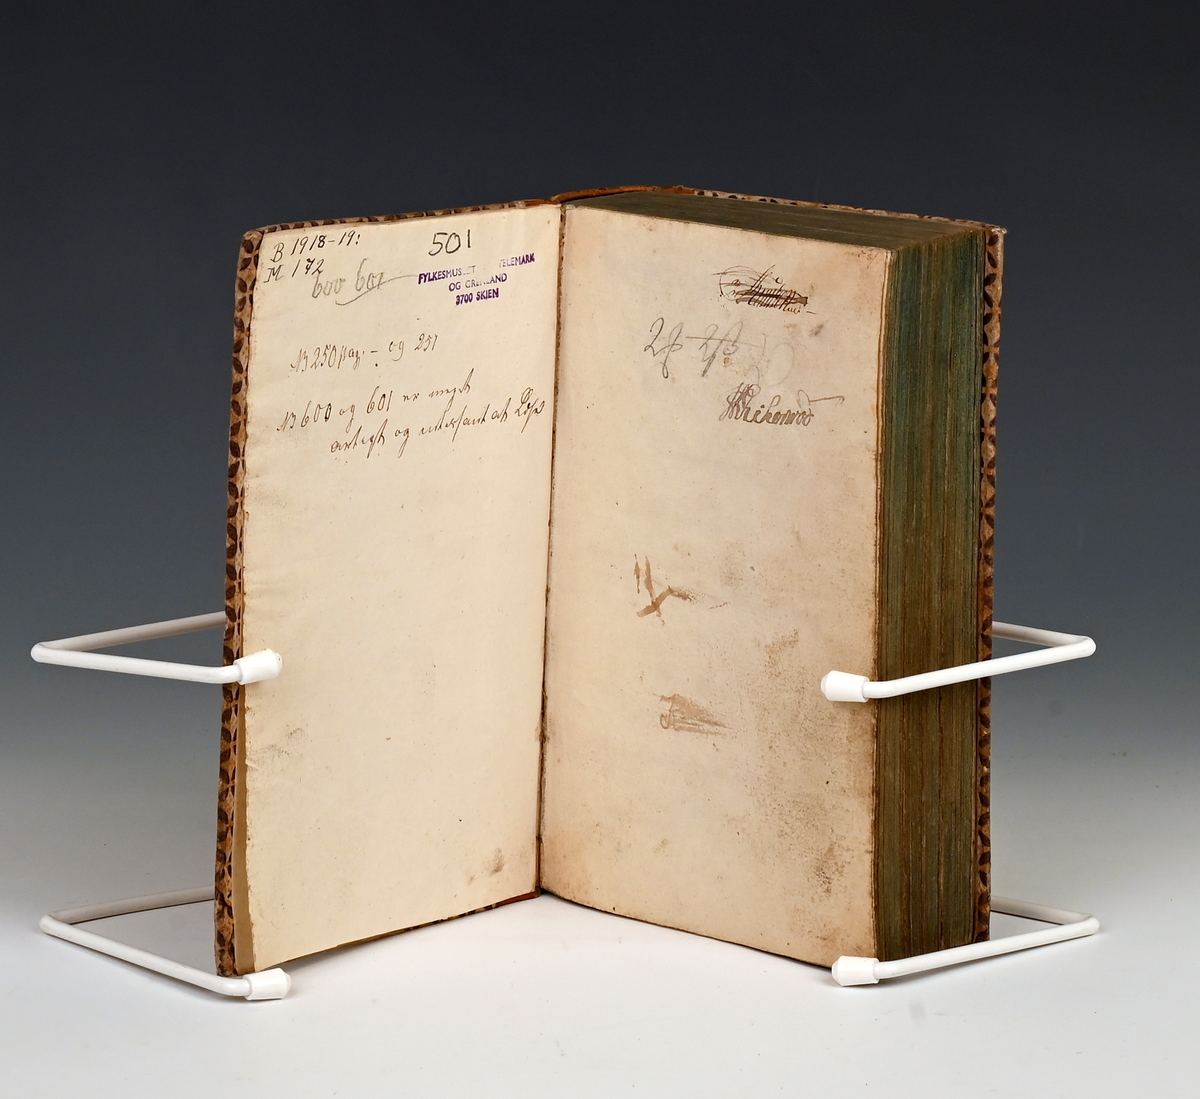 Smellie, William, "Naturhistoriens Philosophie" overs. av. Odin Wolff. Kbhv. 1796. 9 bl. + 679 s. 8 vo. Stift papbind.